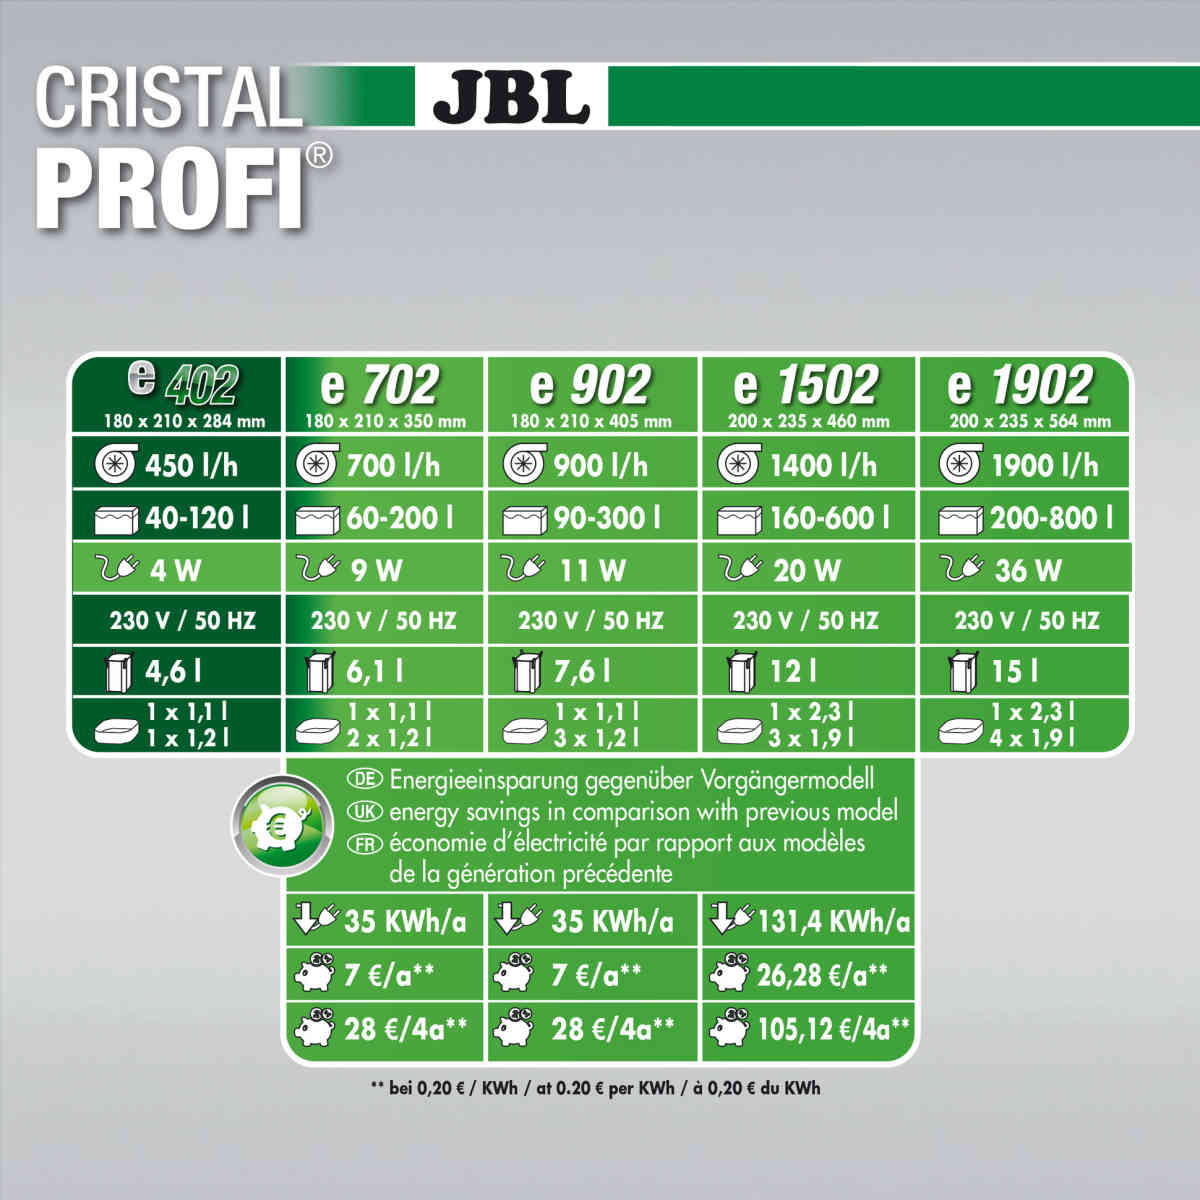 jbl cristalprofi greenline Technische Daten Vergleich mit den anderen Modellen